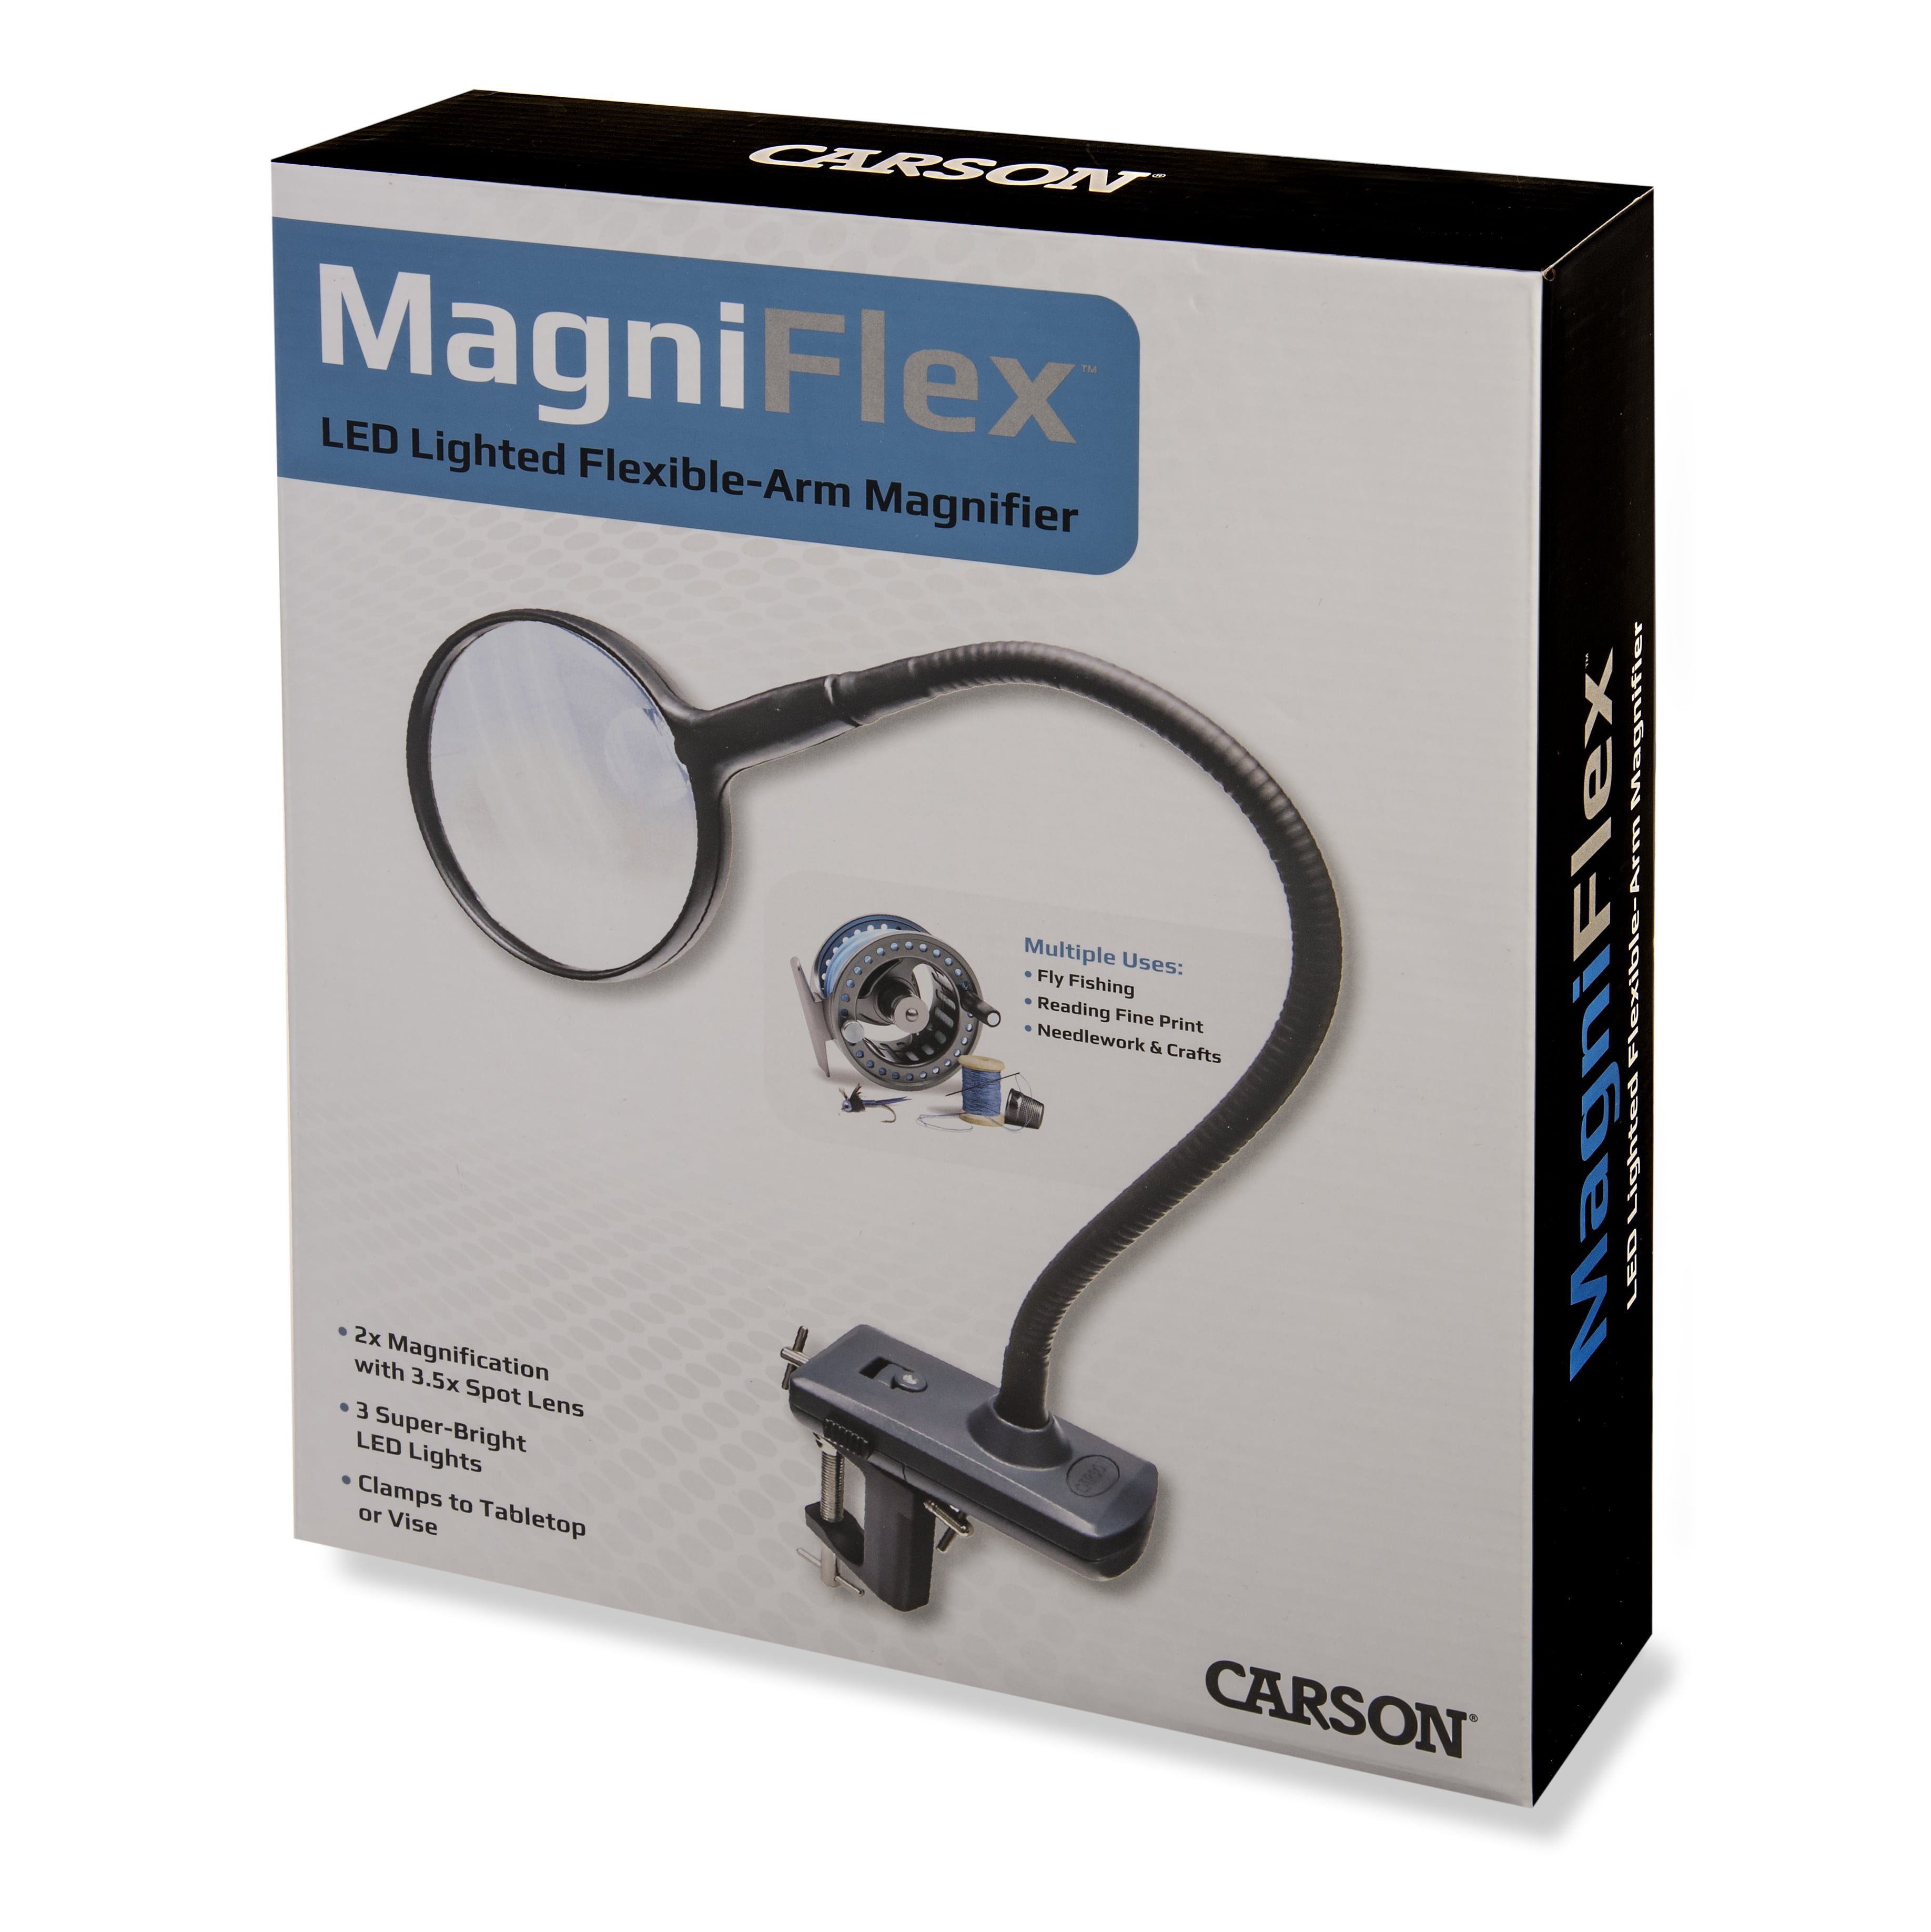 SE - Magnifier - Handheld, 2-in-1 UV/LED, 4 LED, 1 UV - MB606-2XUV